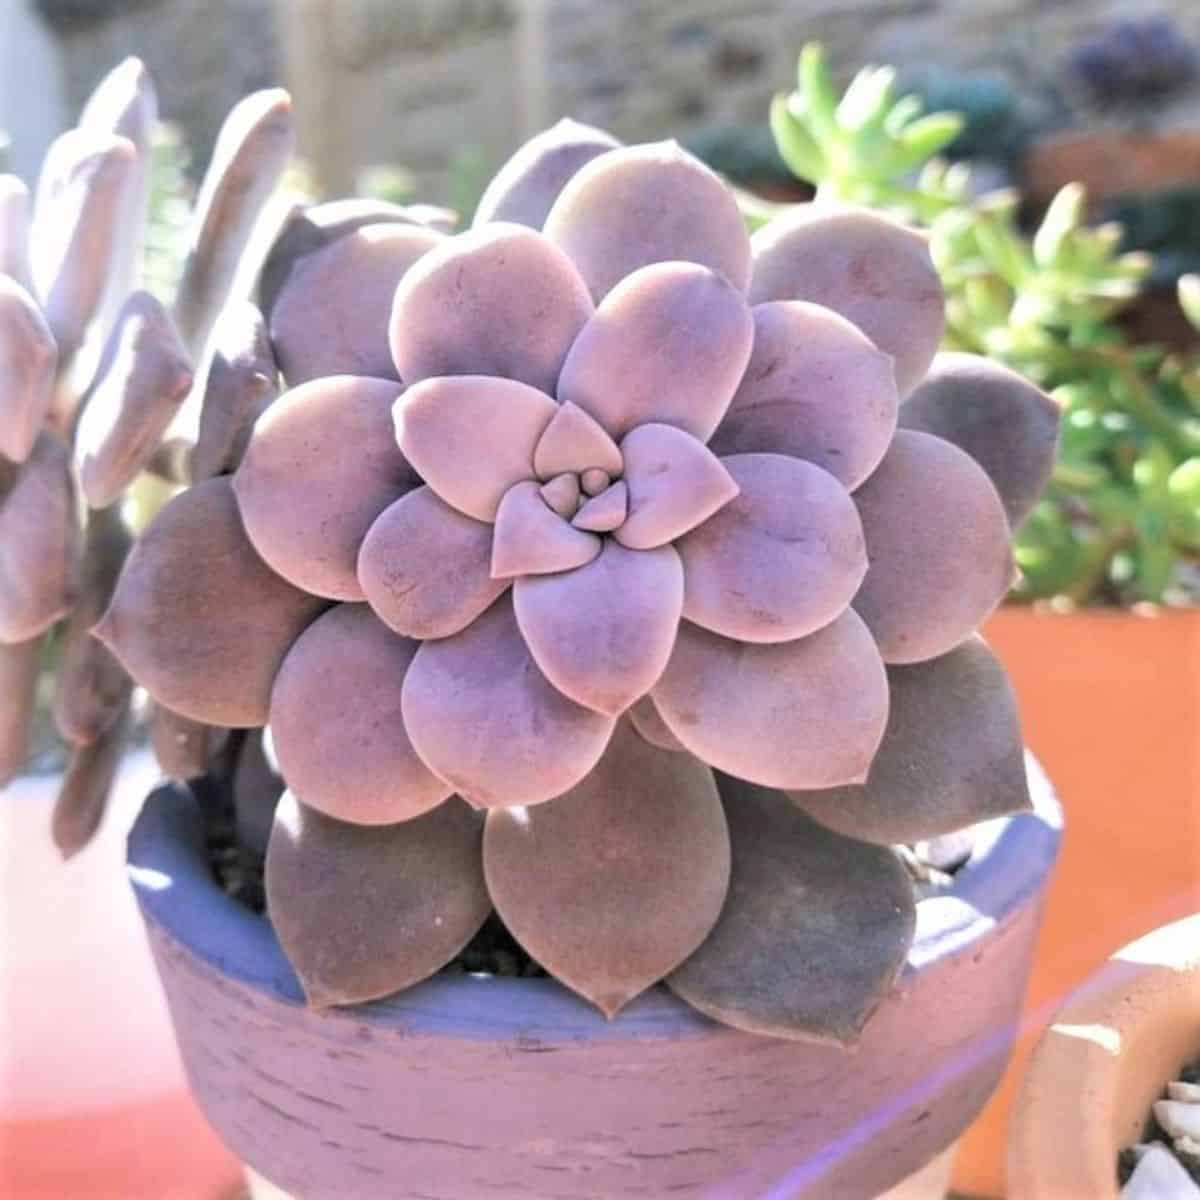 Graptopetalum pentandrum ssp. superbum – Beautiful Graptopetalum growing in a pot.